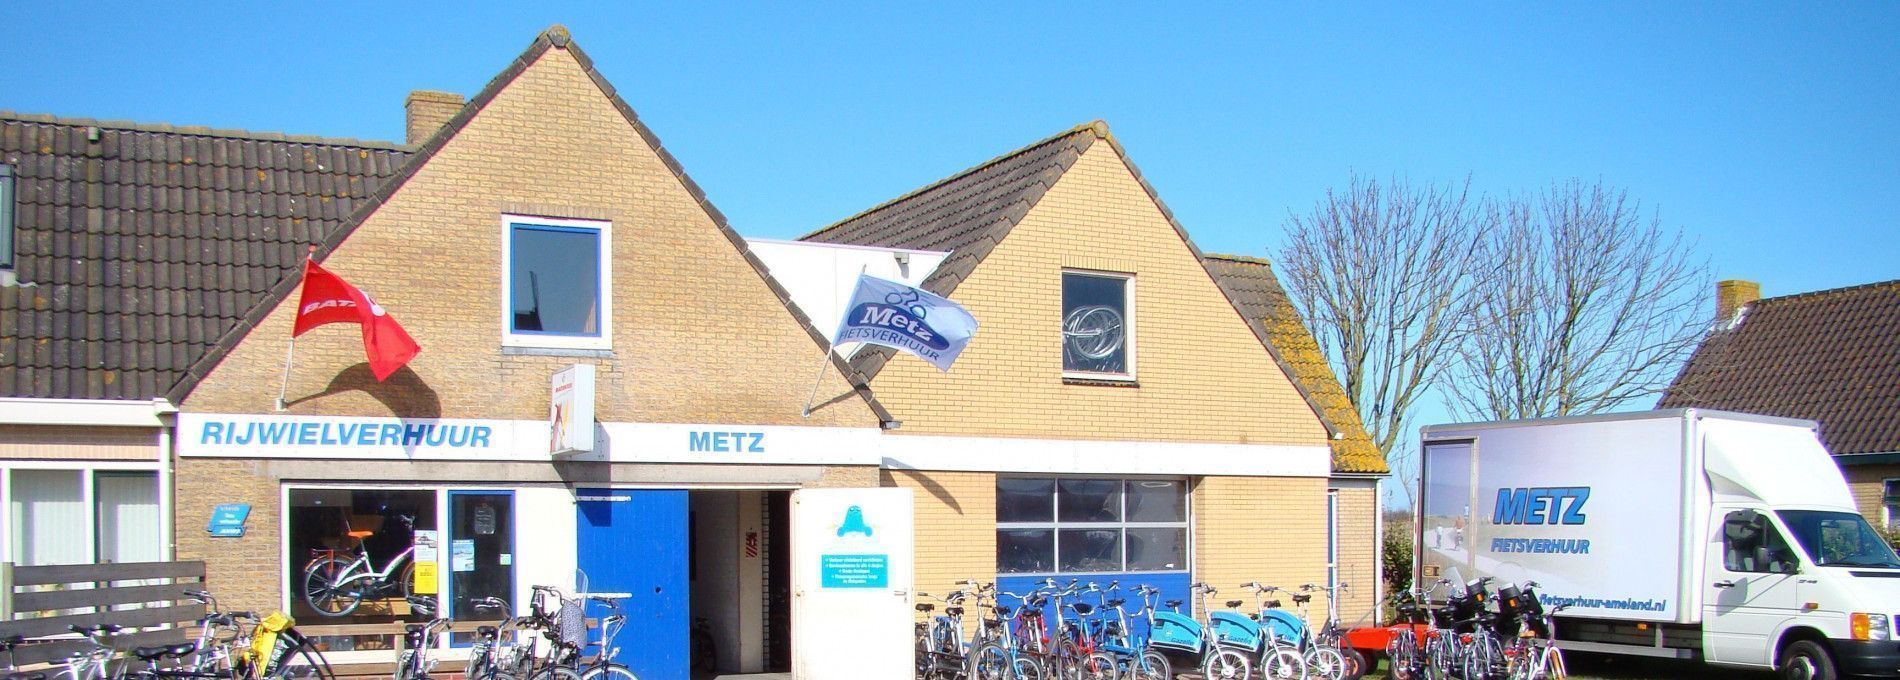 Bike rental Metz - Tourist Information “VVV” Ameland